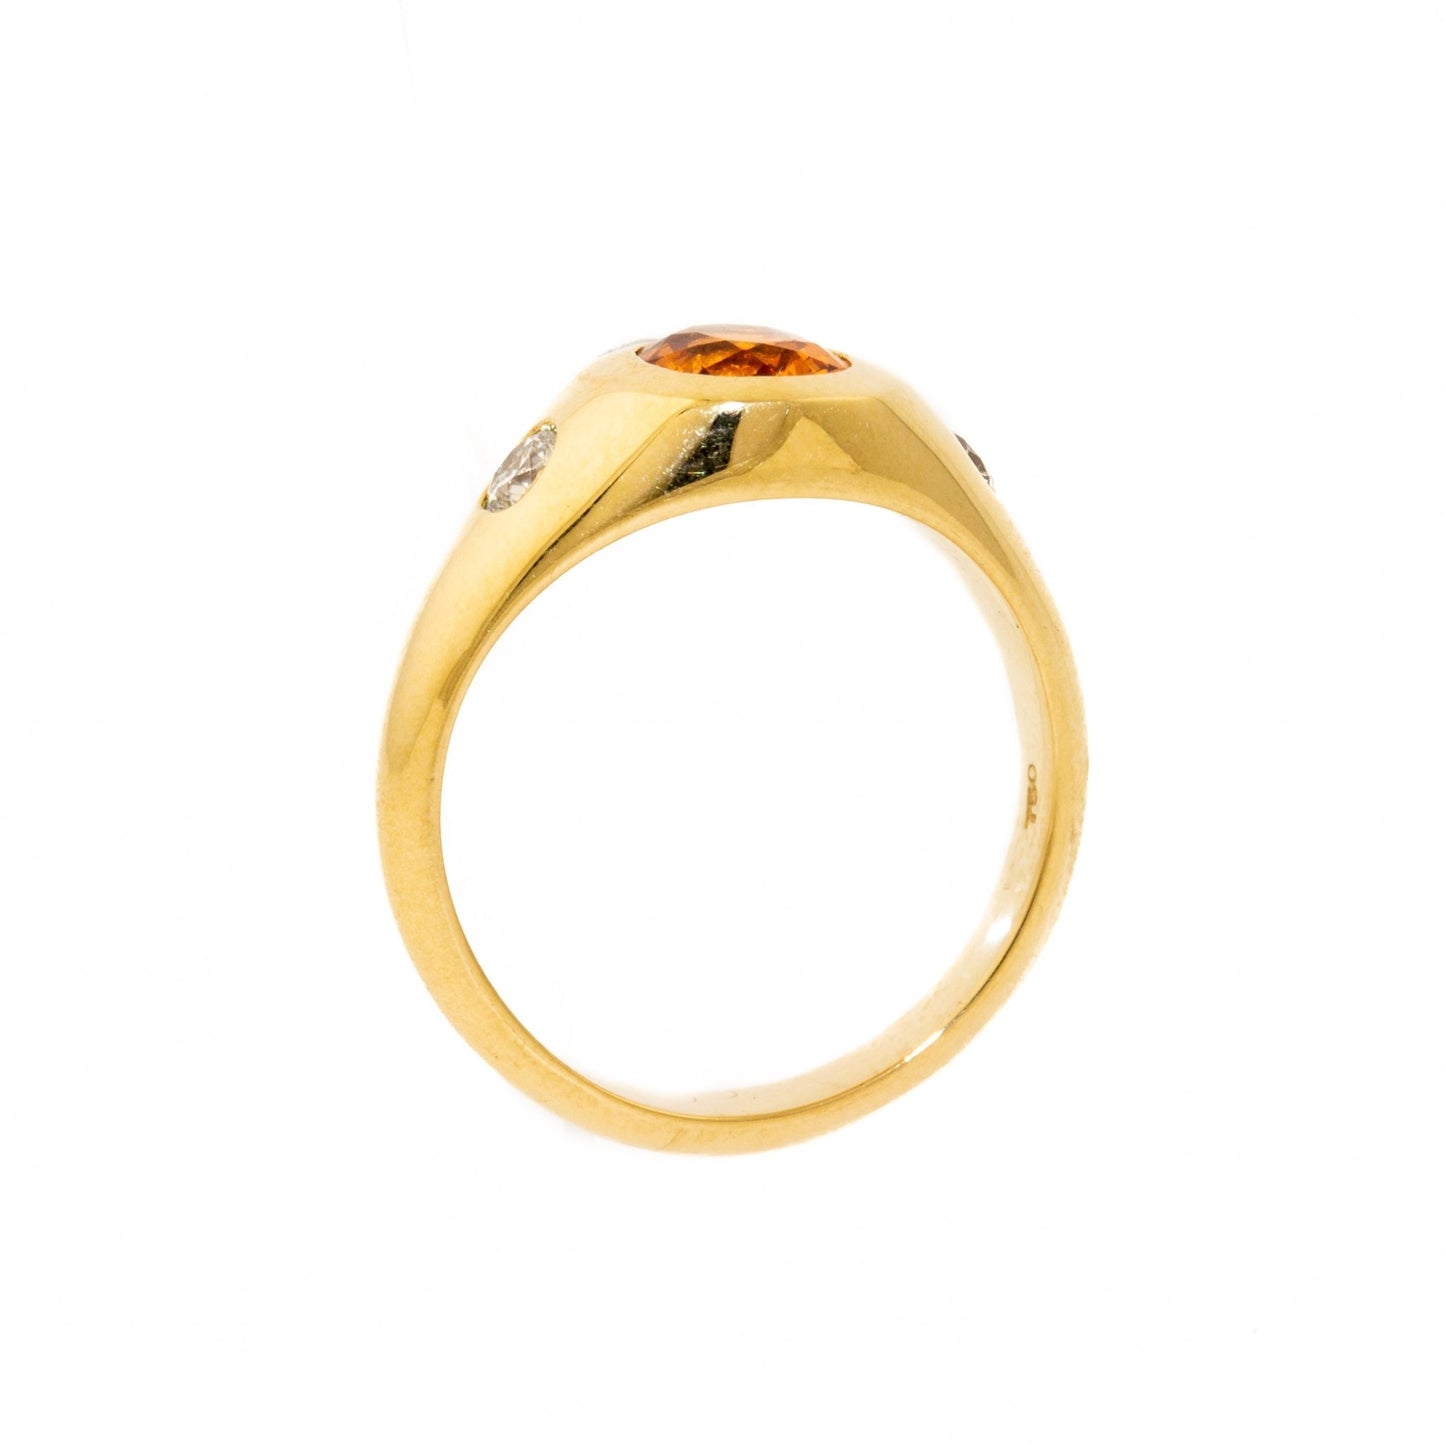 Stradella Mandarin Garnet Ring - Kingdom Jewelry